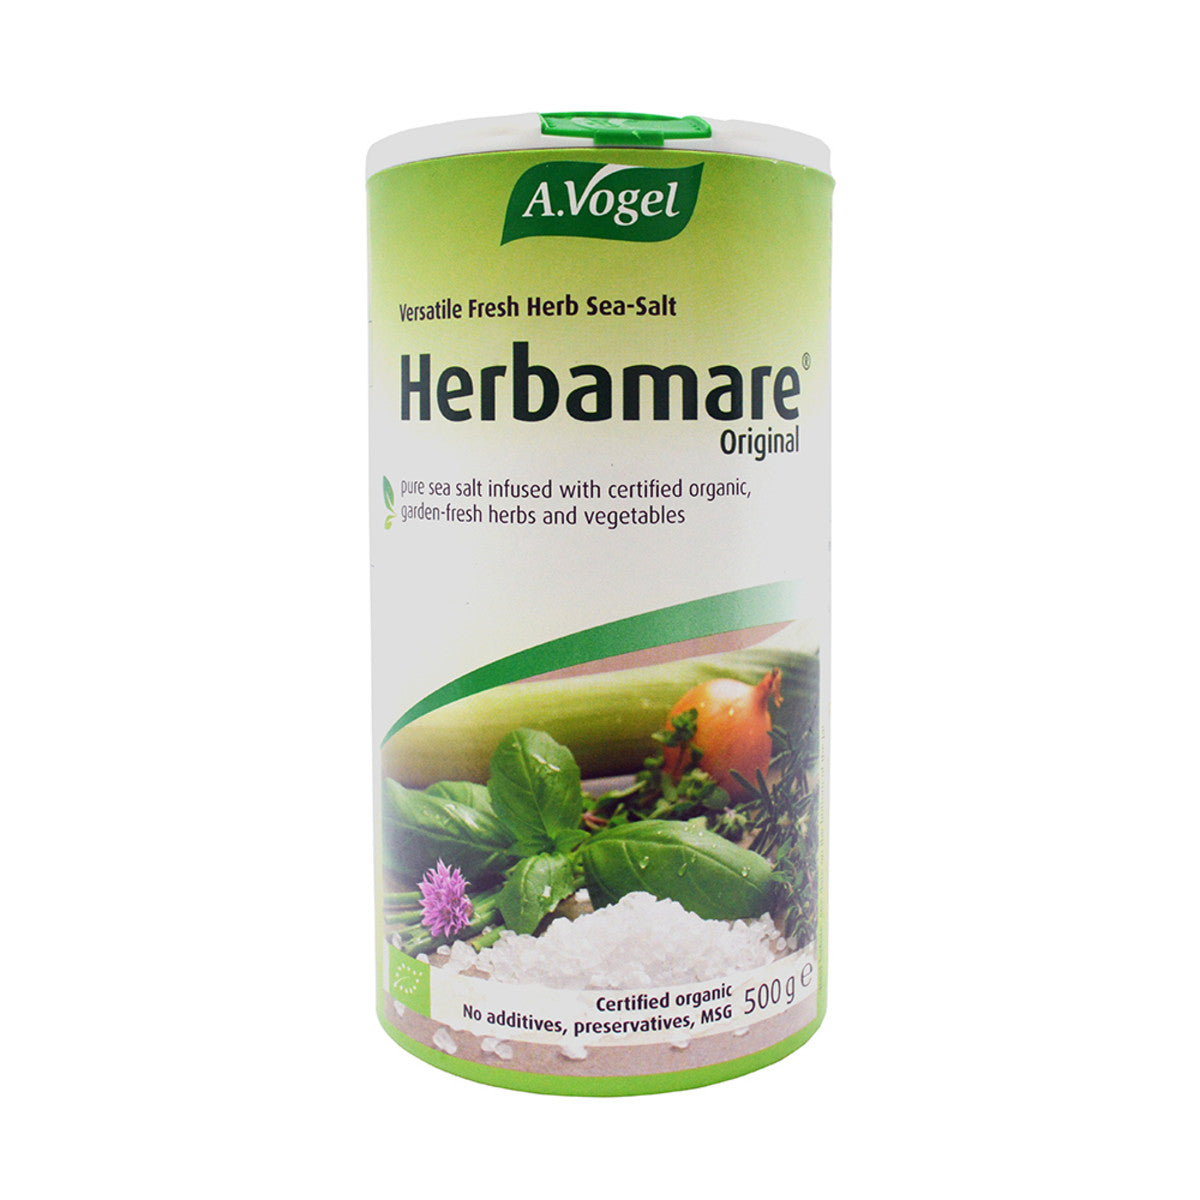 A. Vogel Herbamare. Original, Spicy and Low Salt.